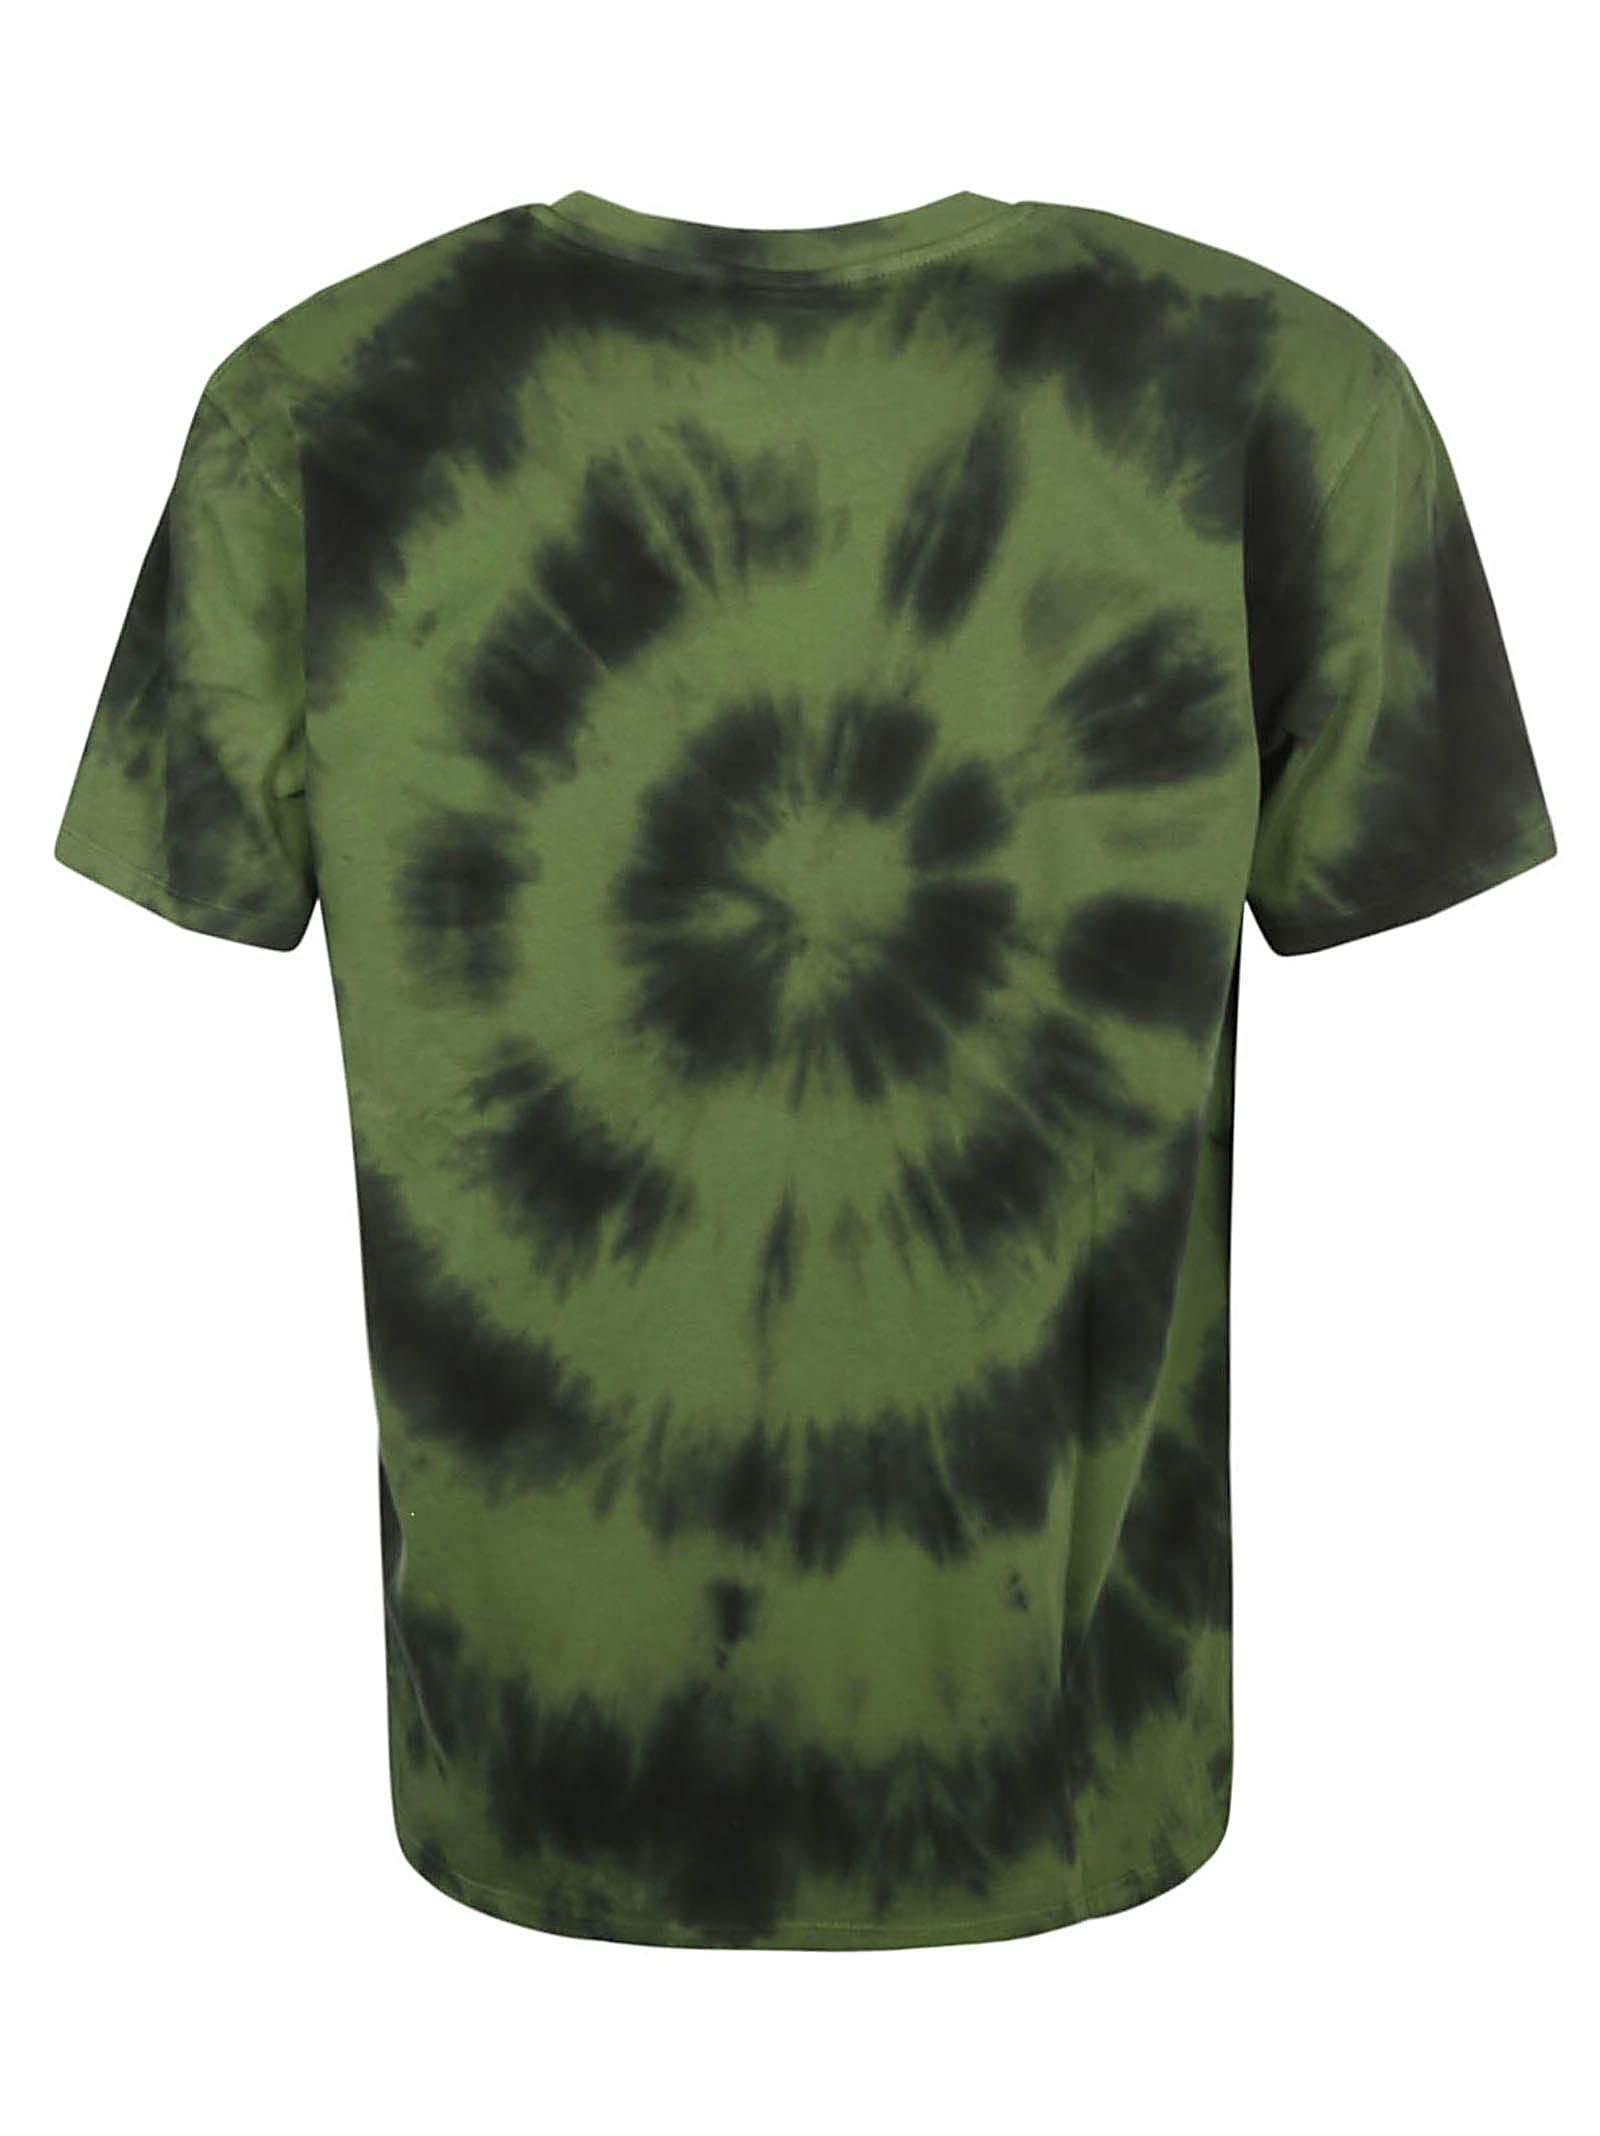 Sundek Cotton Tie & Dye T-shirt in Military Green (Green) for Men - Save 5%  | Lyst